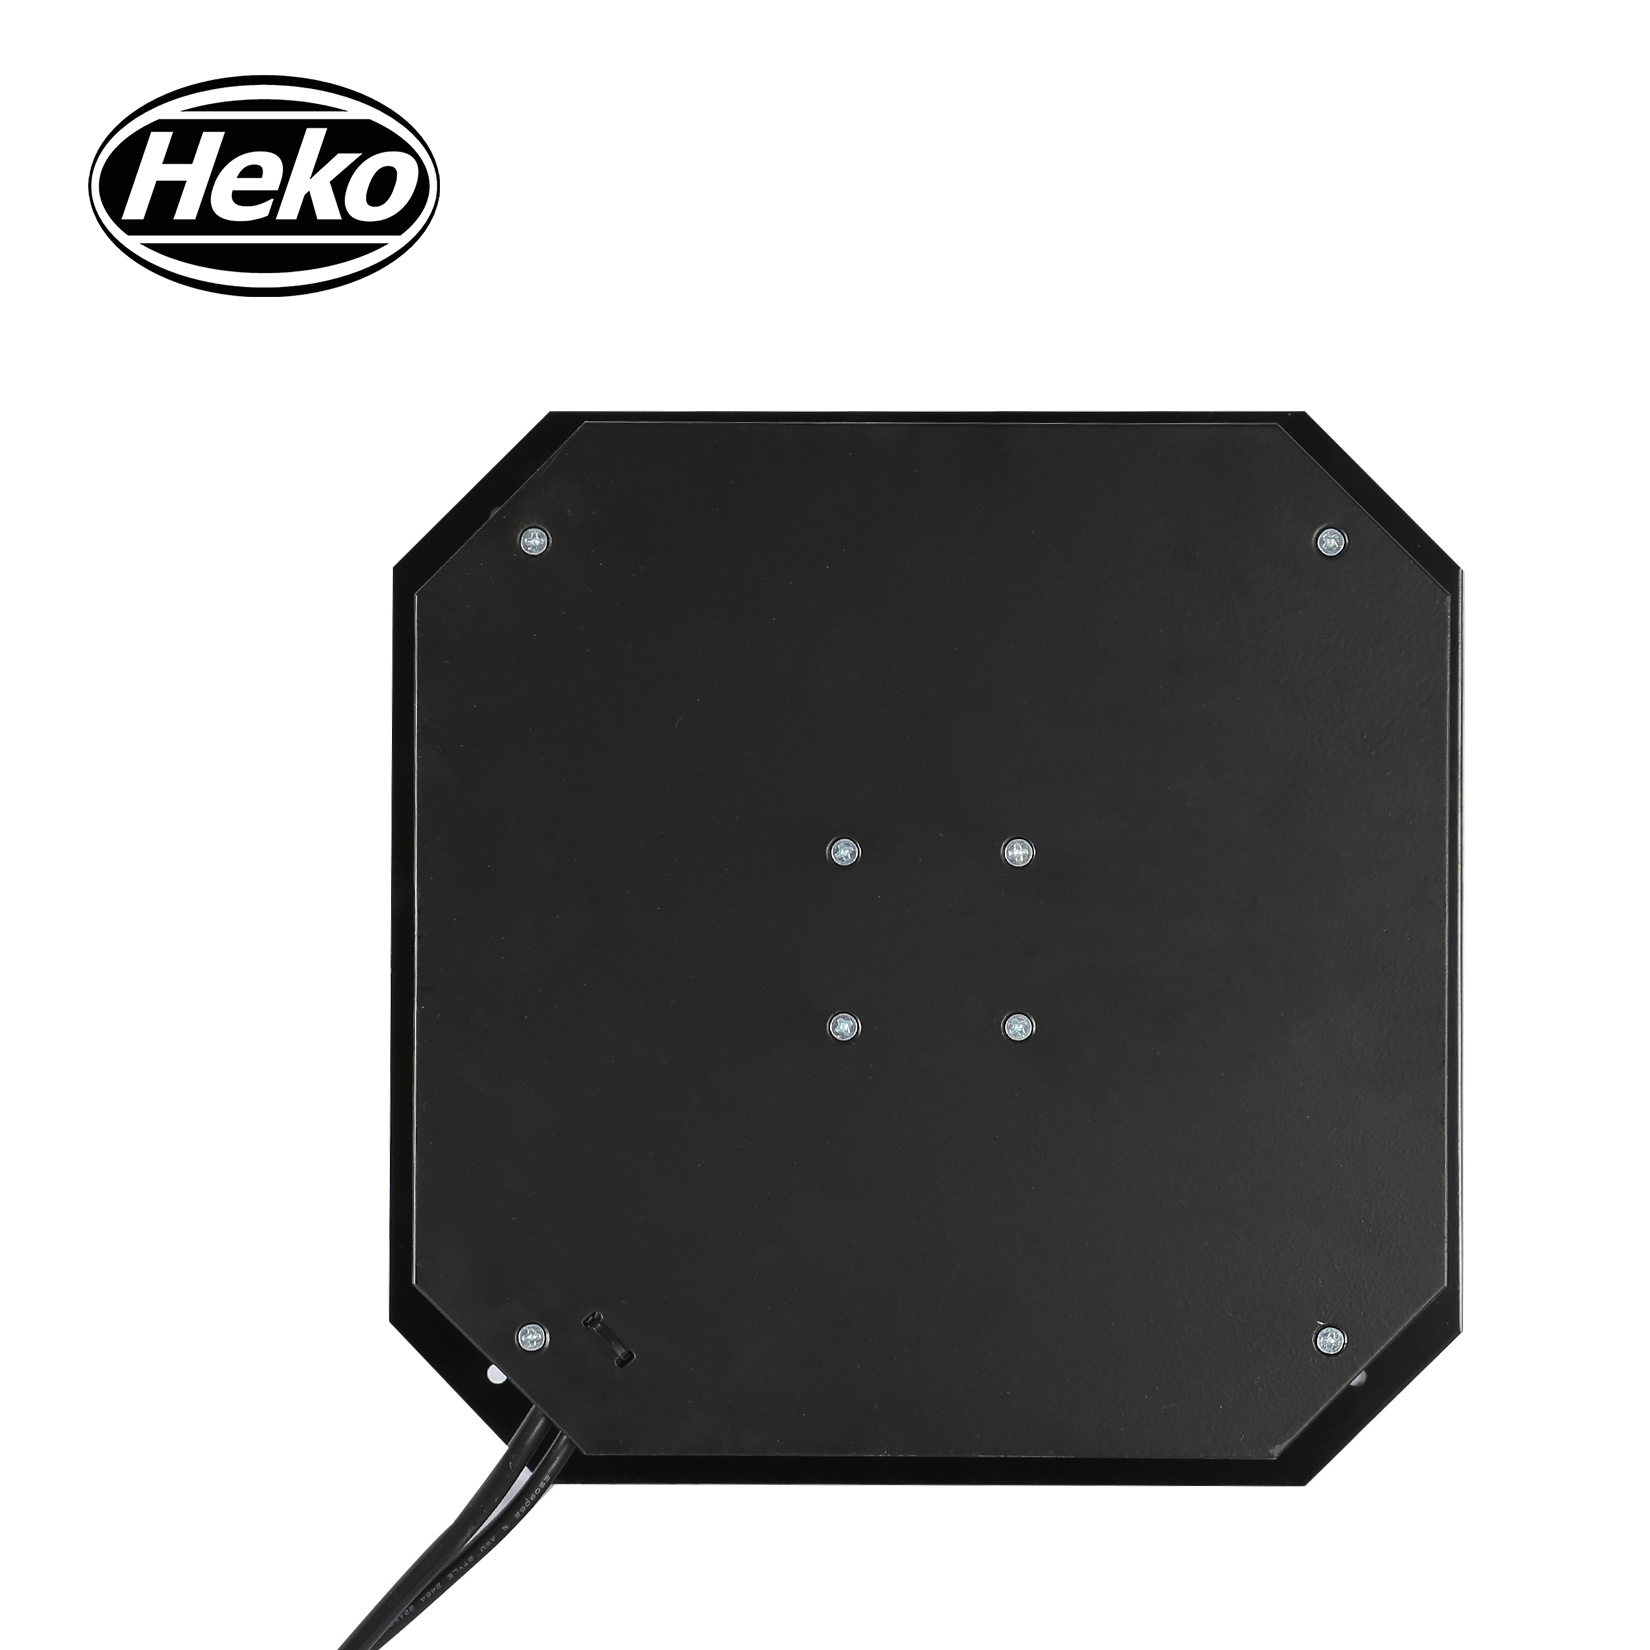 HEKO EC190mm Low Noise Air Cooler Centrifugal Fan